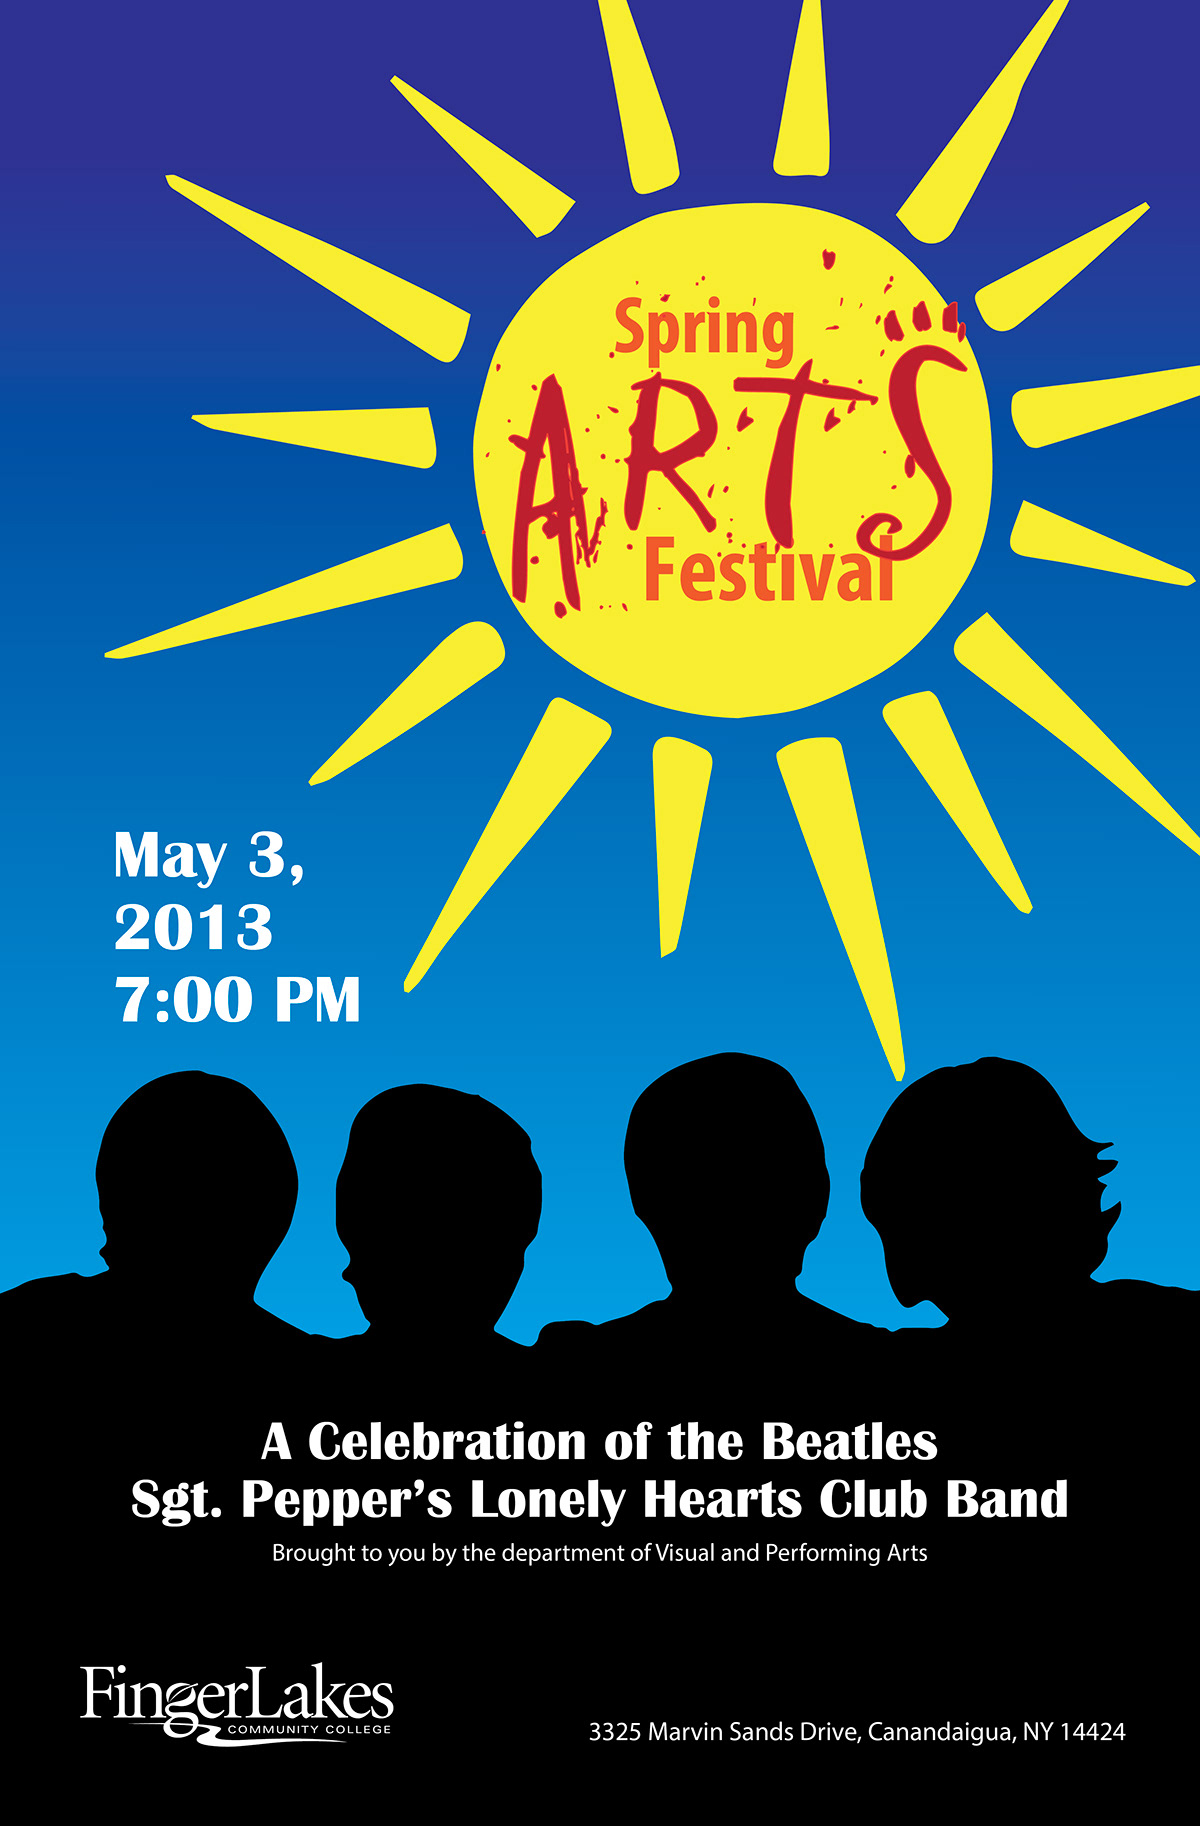 spring  arts   festival  FLCC Beatles